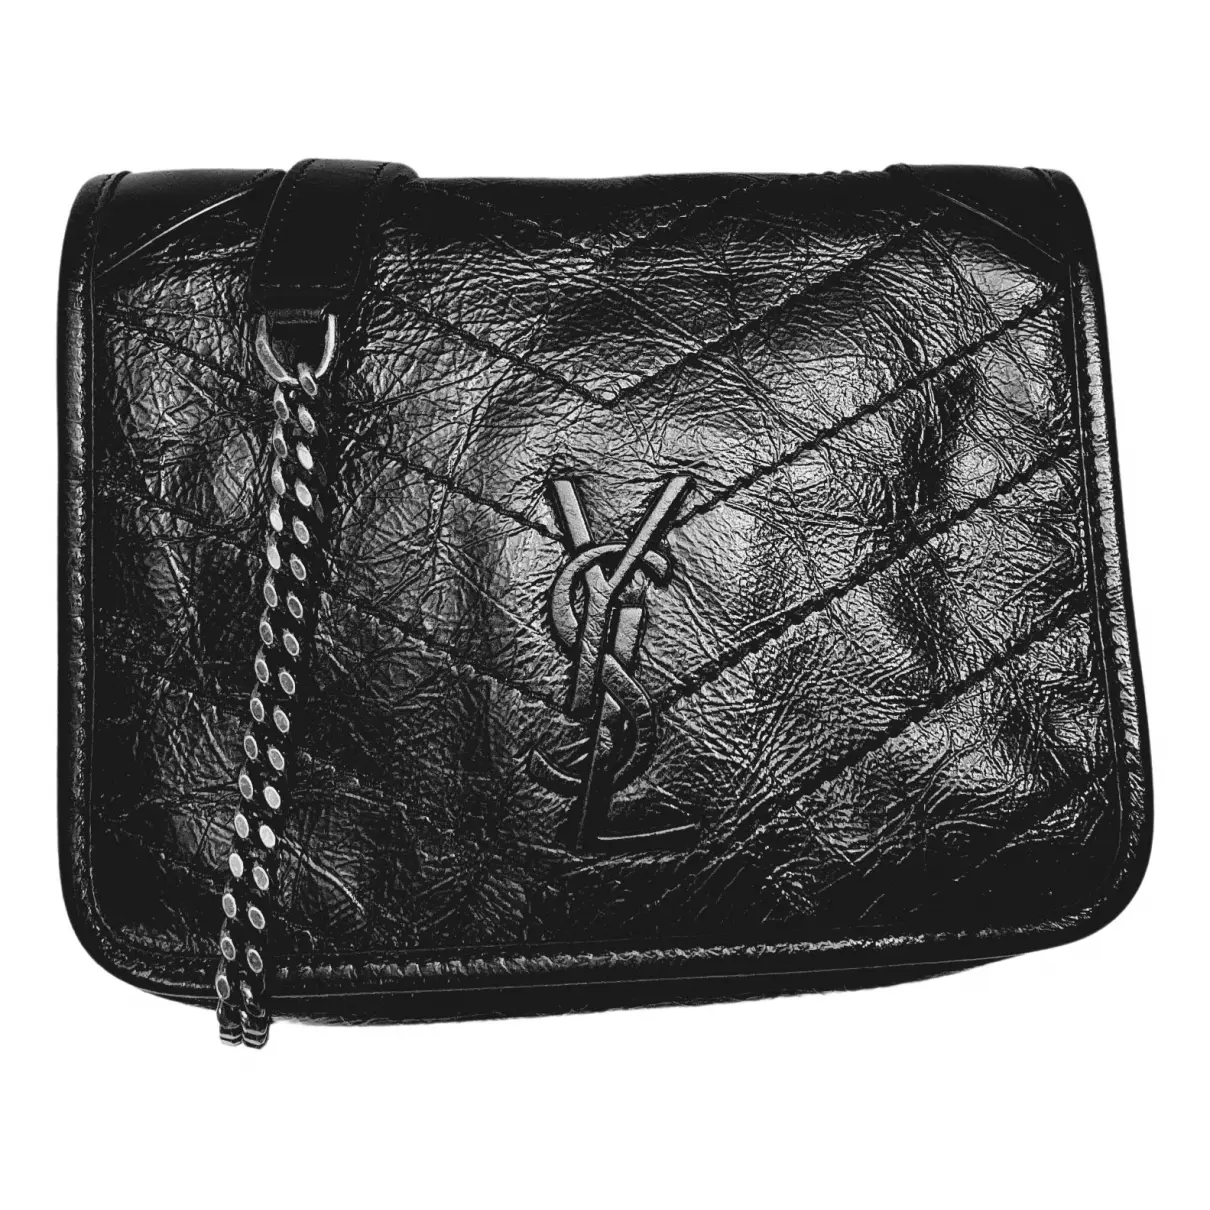 Patent leather bag Yves Saint Laurent